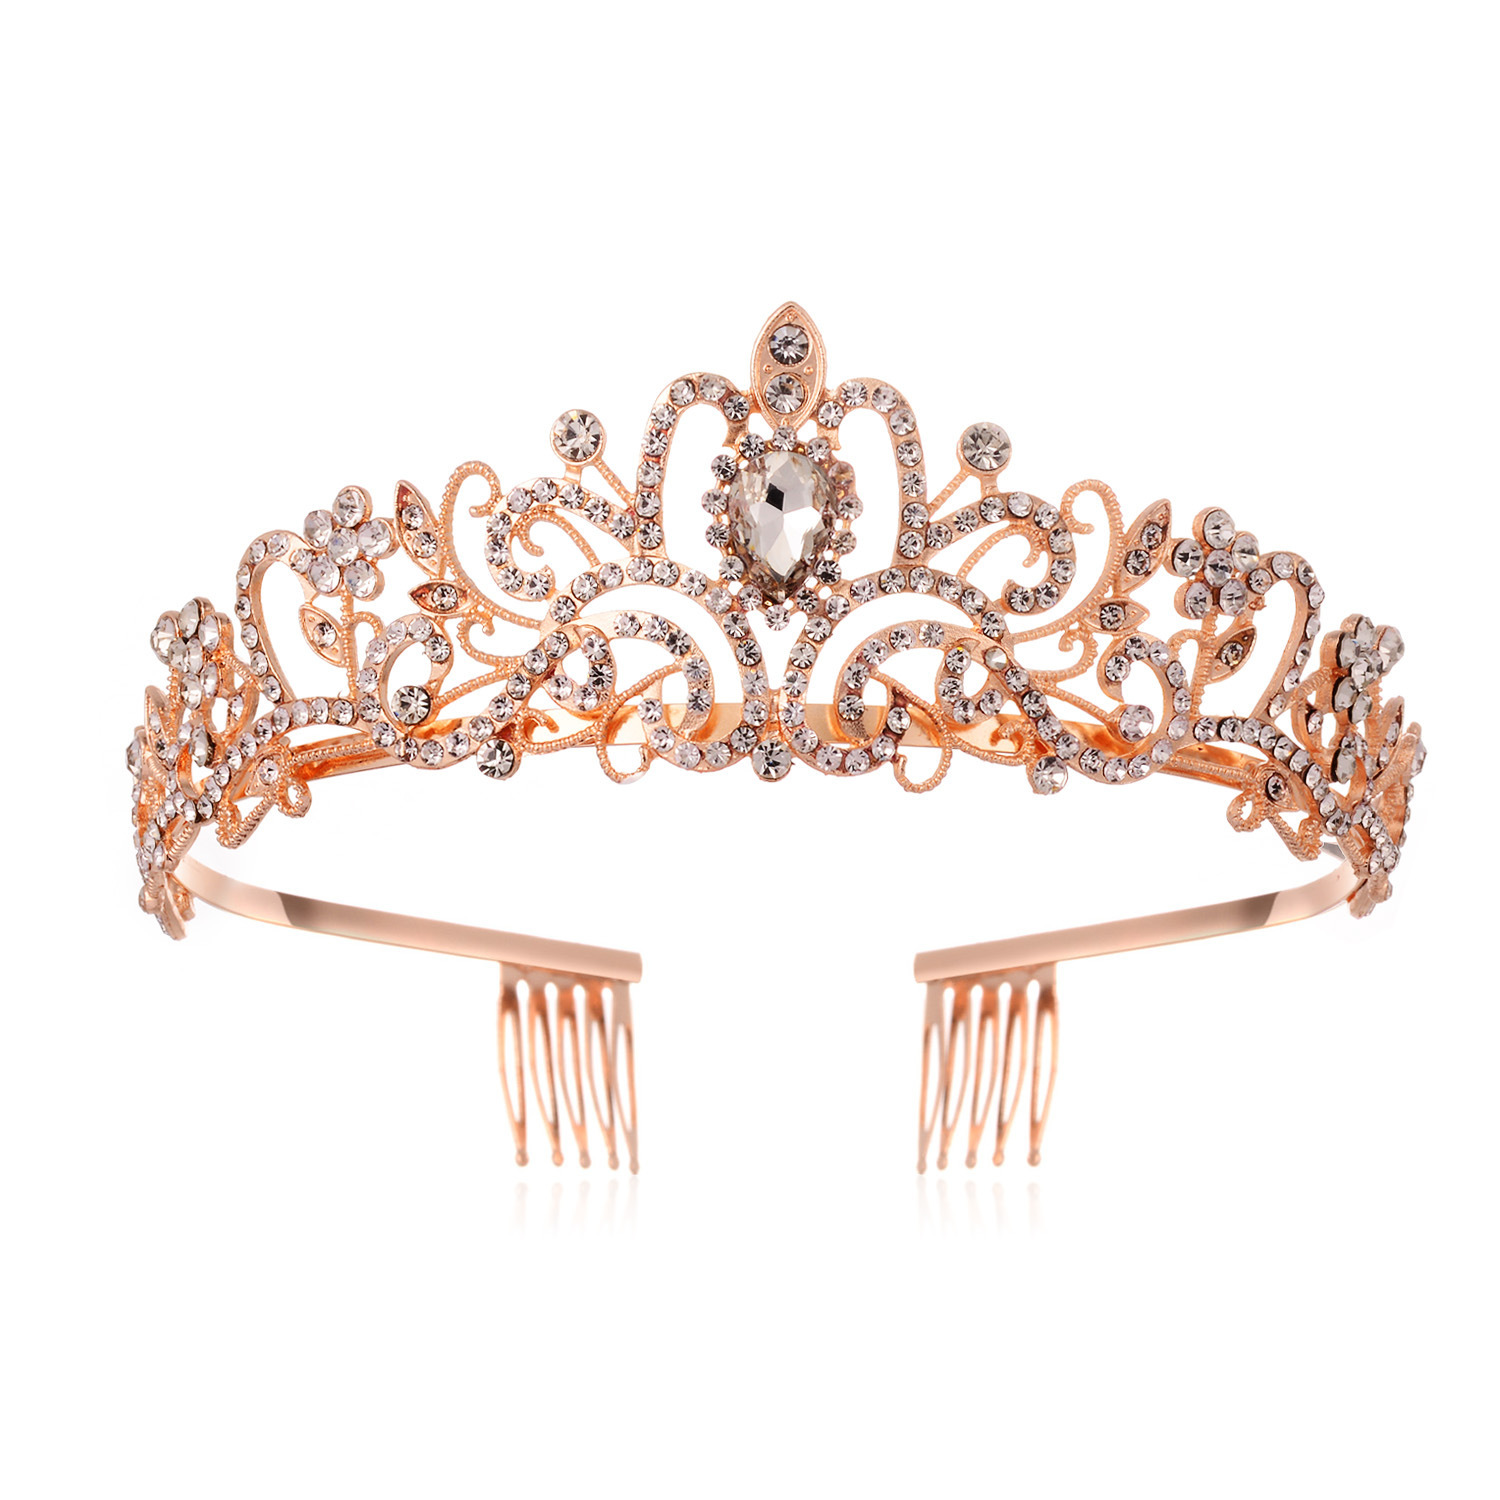 Regal Bridal Tiara Crown – Elegant Wedding Updo Headpiece for Birthdays & Gala Events